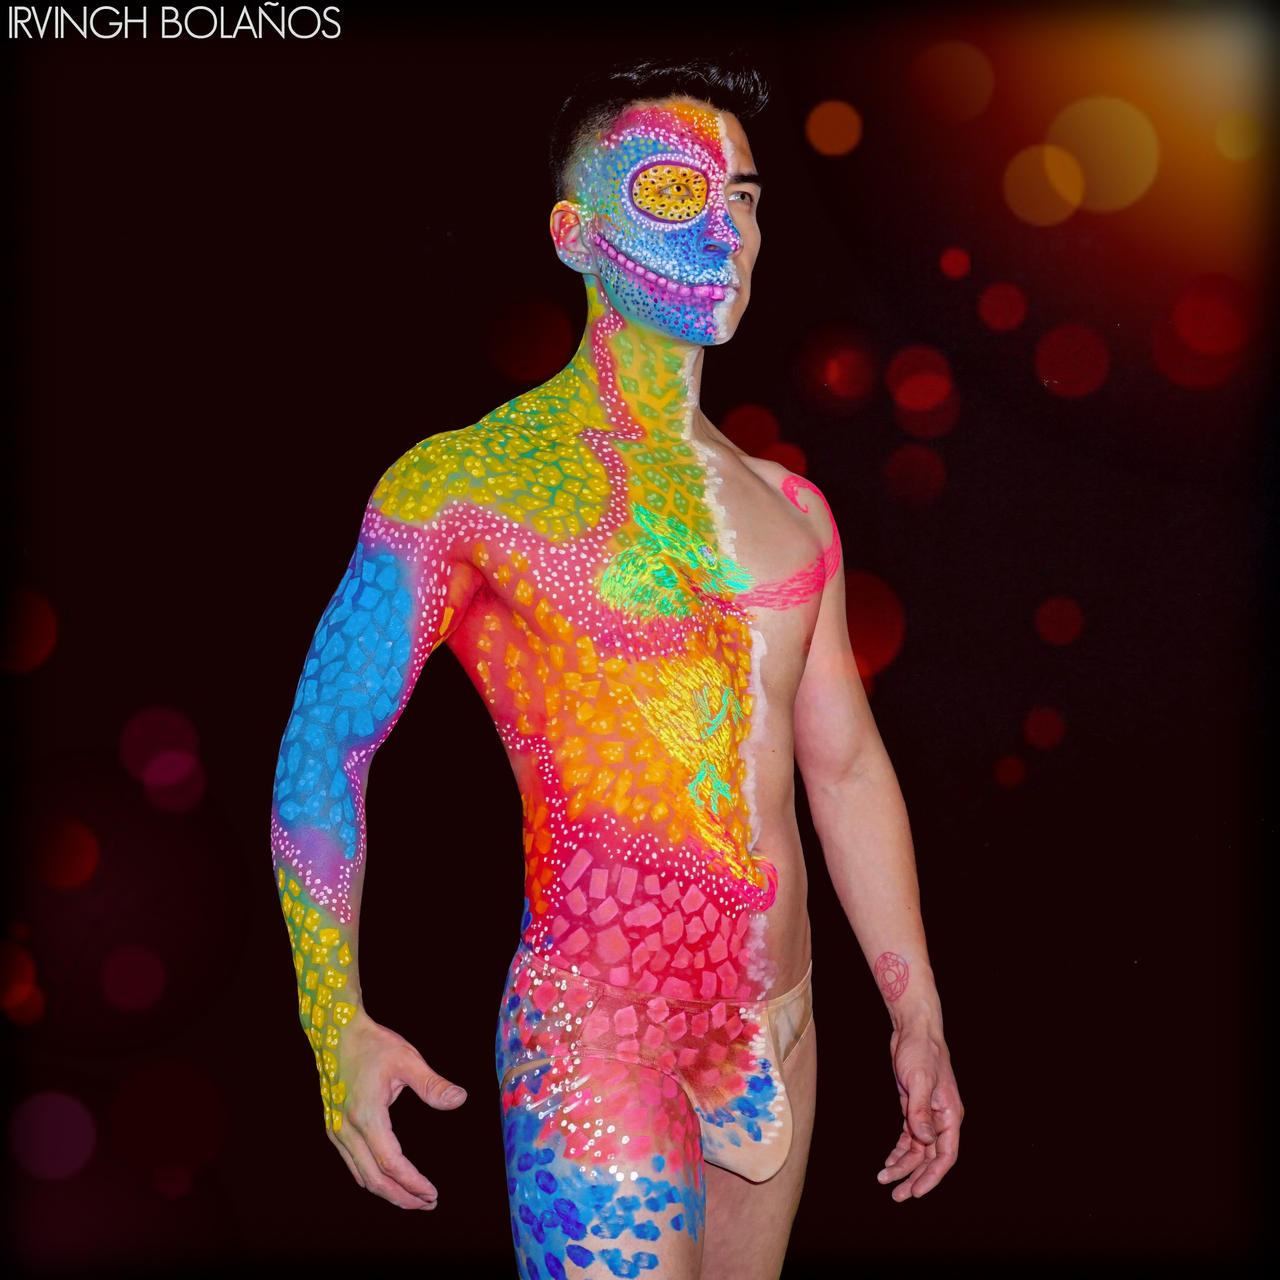 Chamaleon neon bodypaint cosplay irvinghbolanos by irvinghbolanos on  DeviantArt